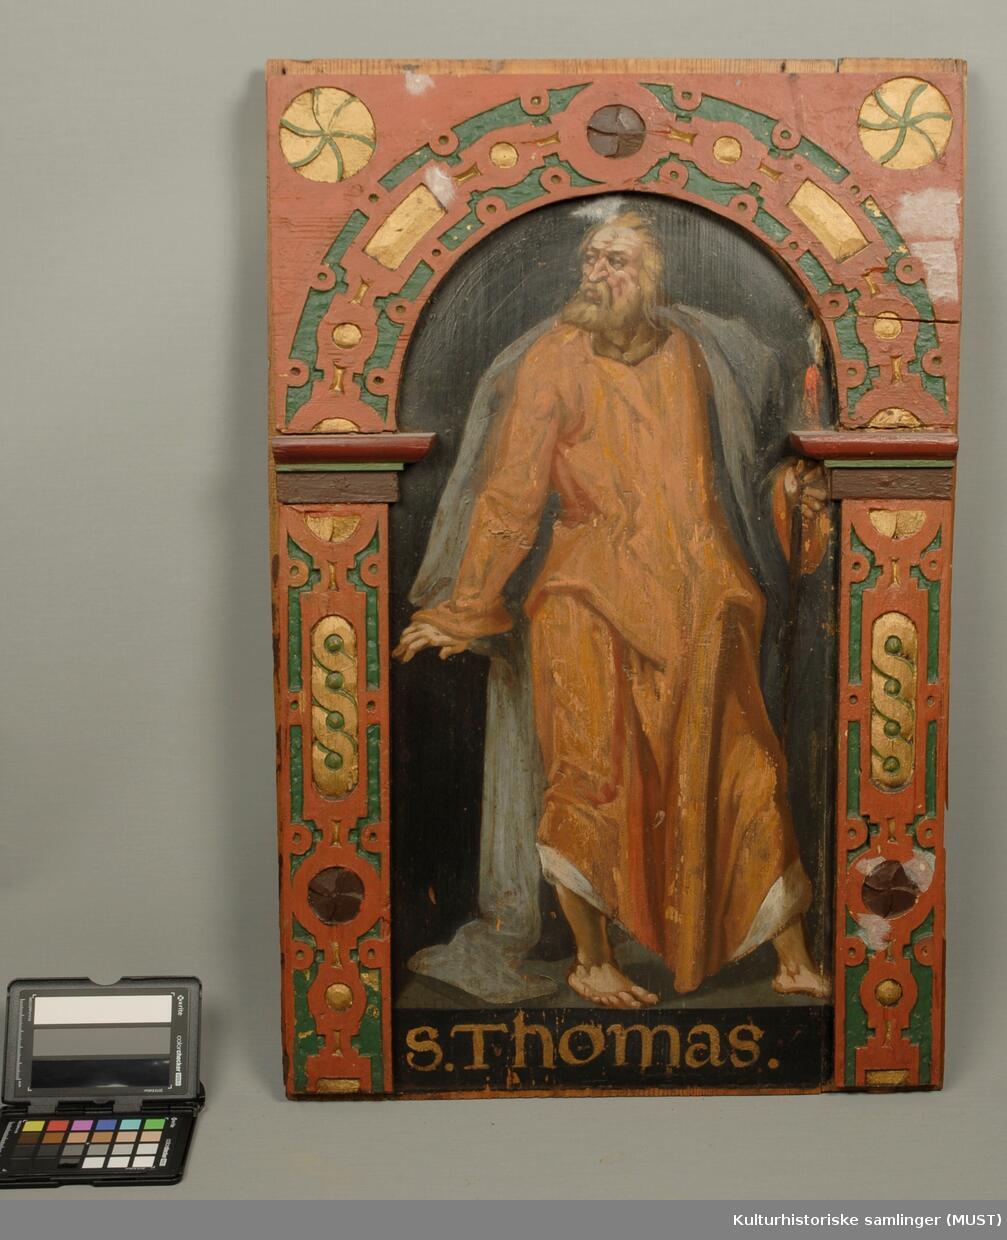 St. Thomas med landse i venstre hånd.